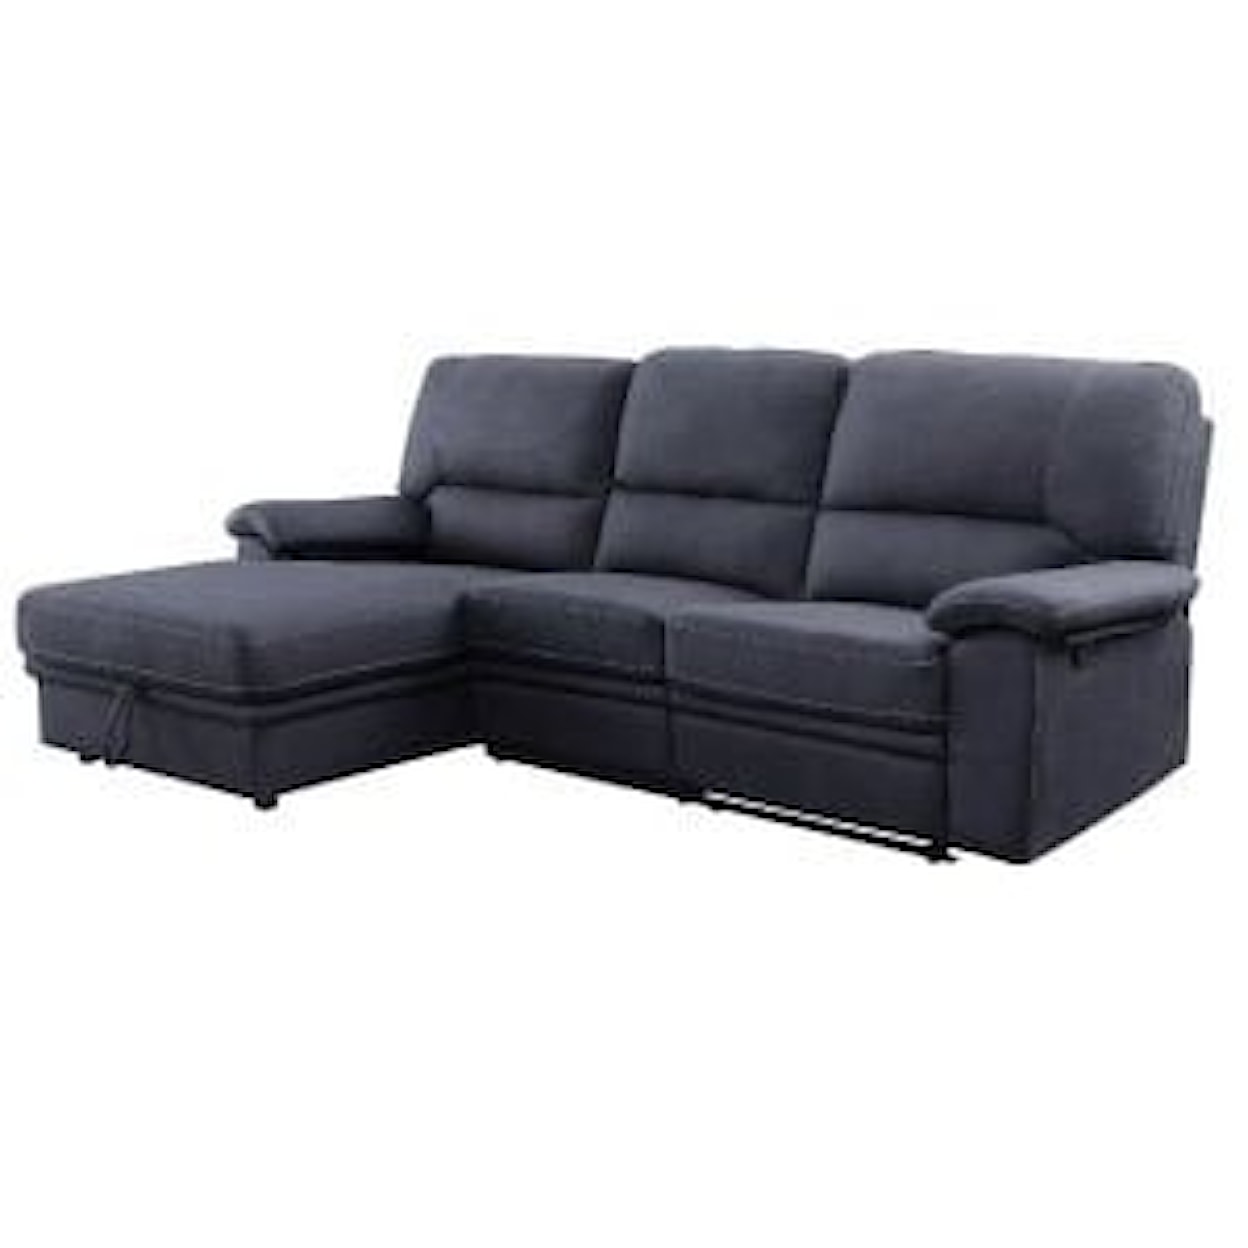 Acme Furniture Trifora Sectional Sofa